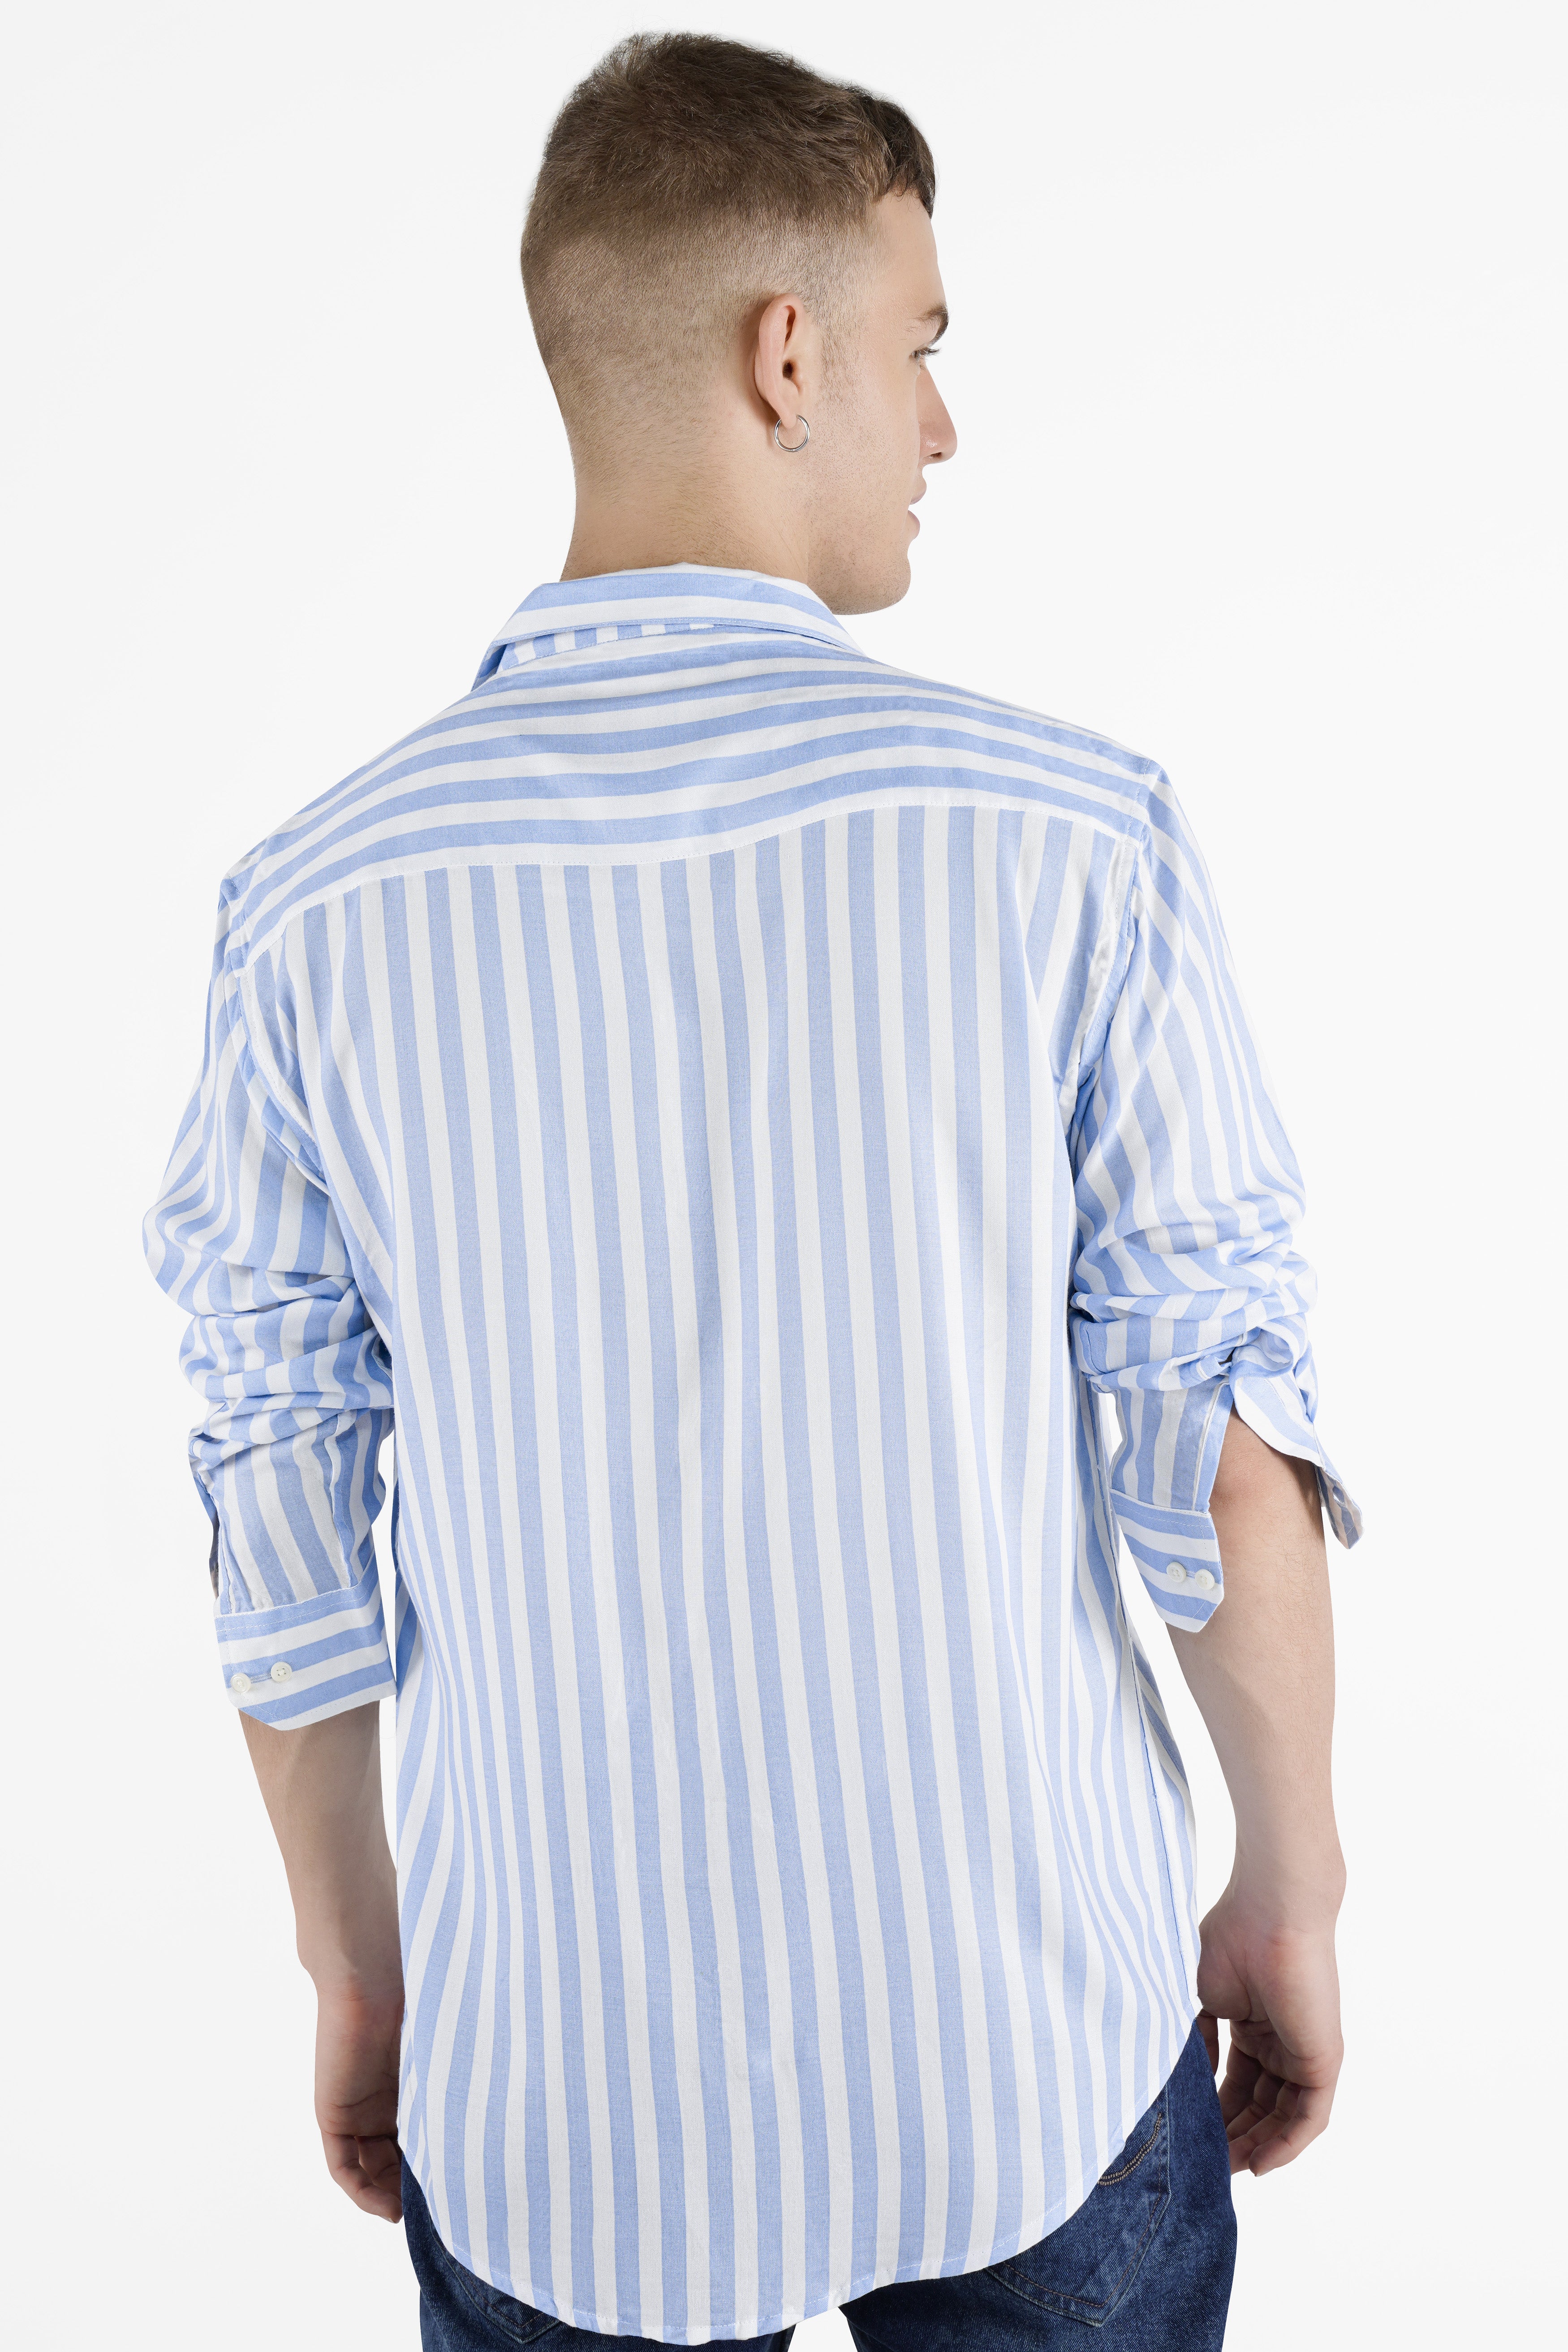 Pale Aqua Blue and White Striped Premium Tencel Shirt